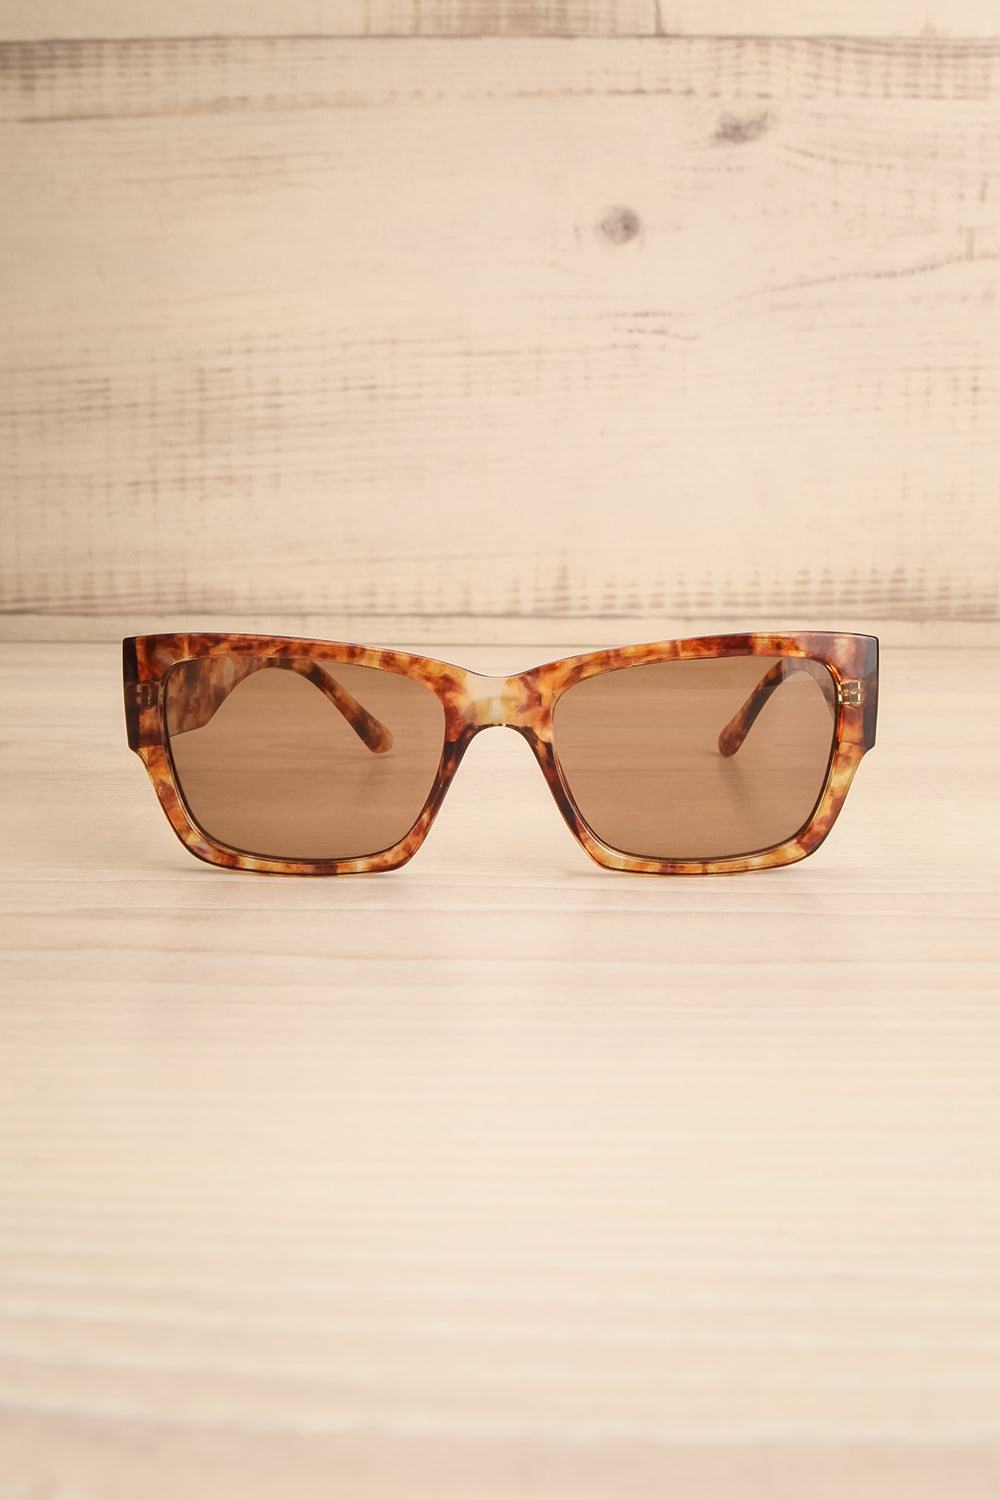 Sunglasses Cascade Apricot | Karün North America